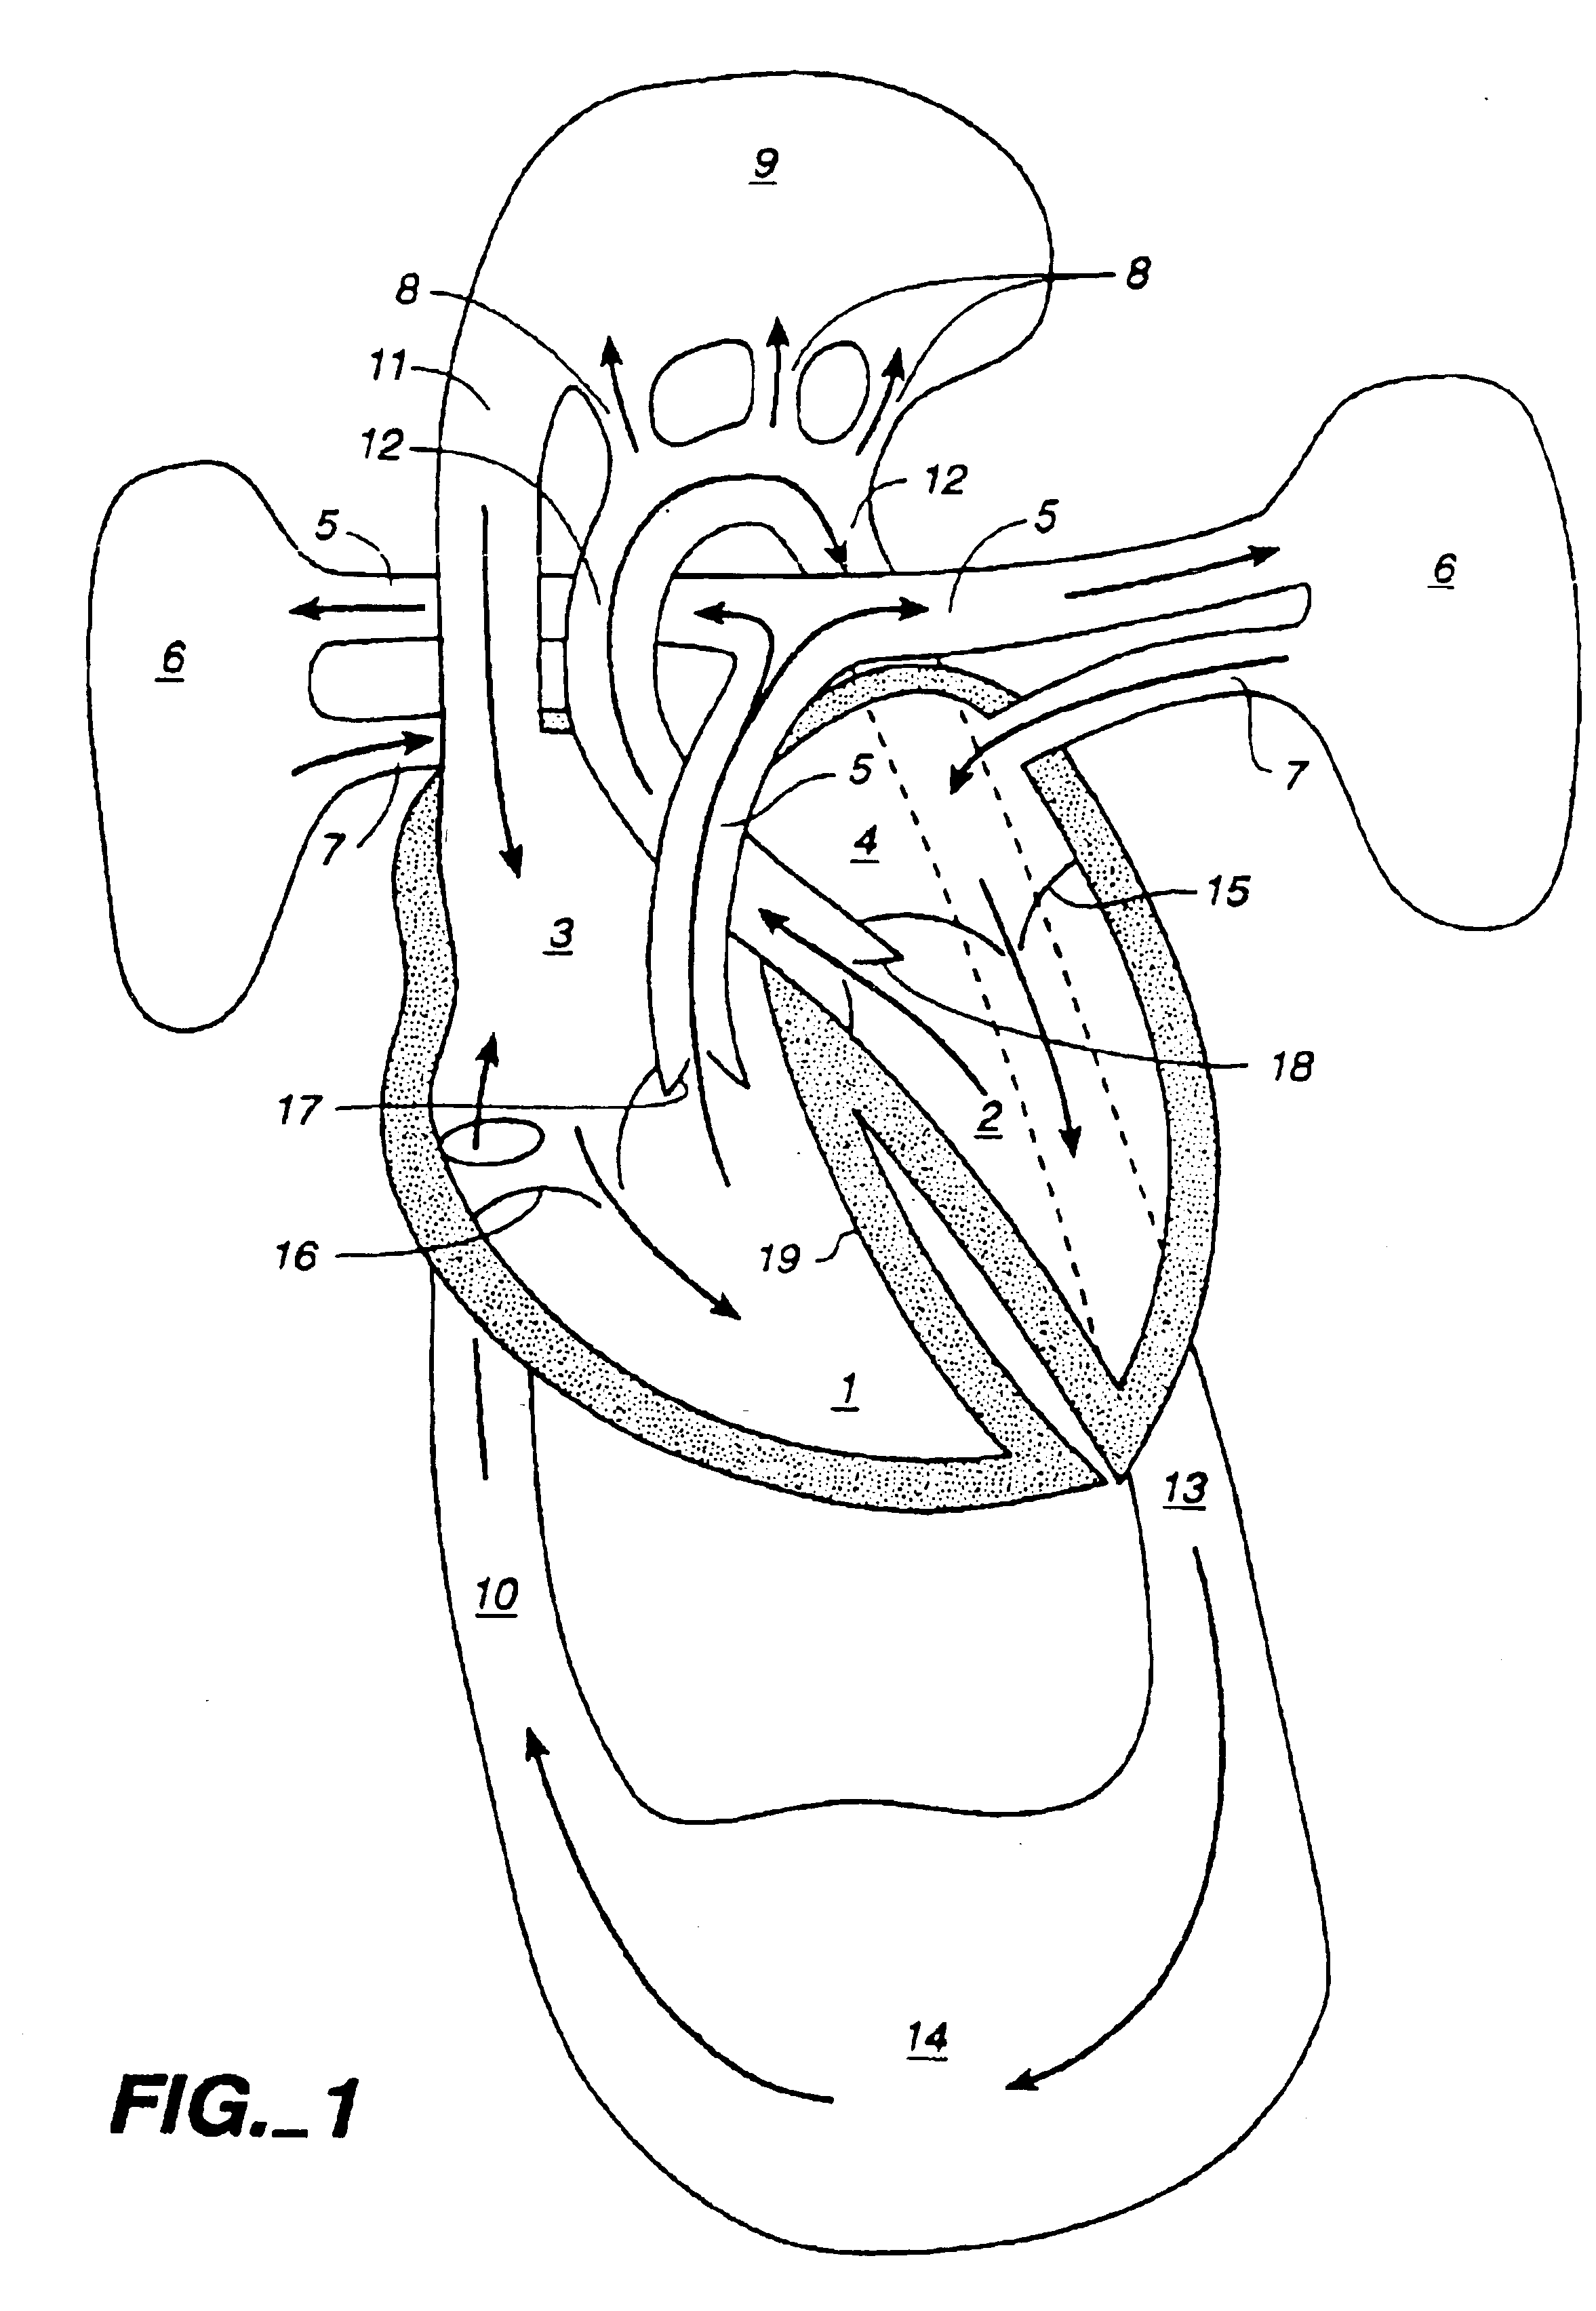 Multichannel catheter